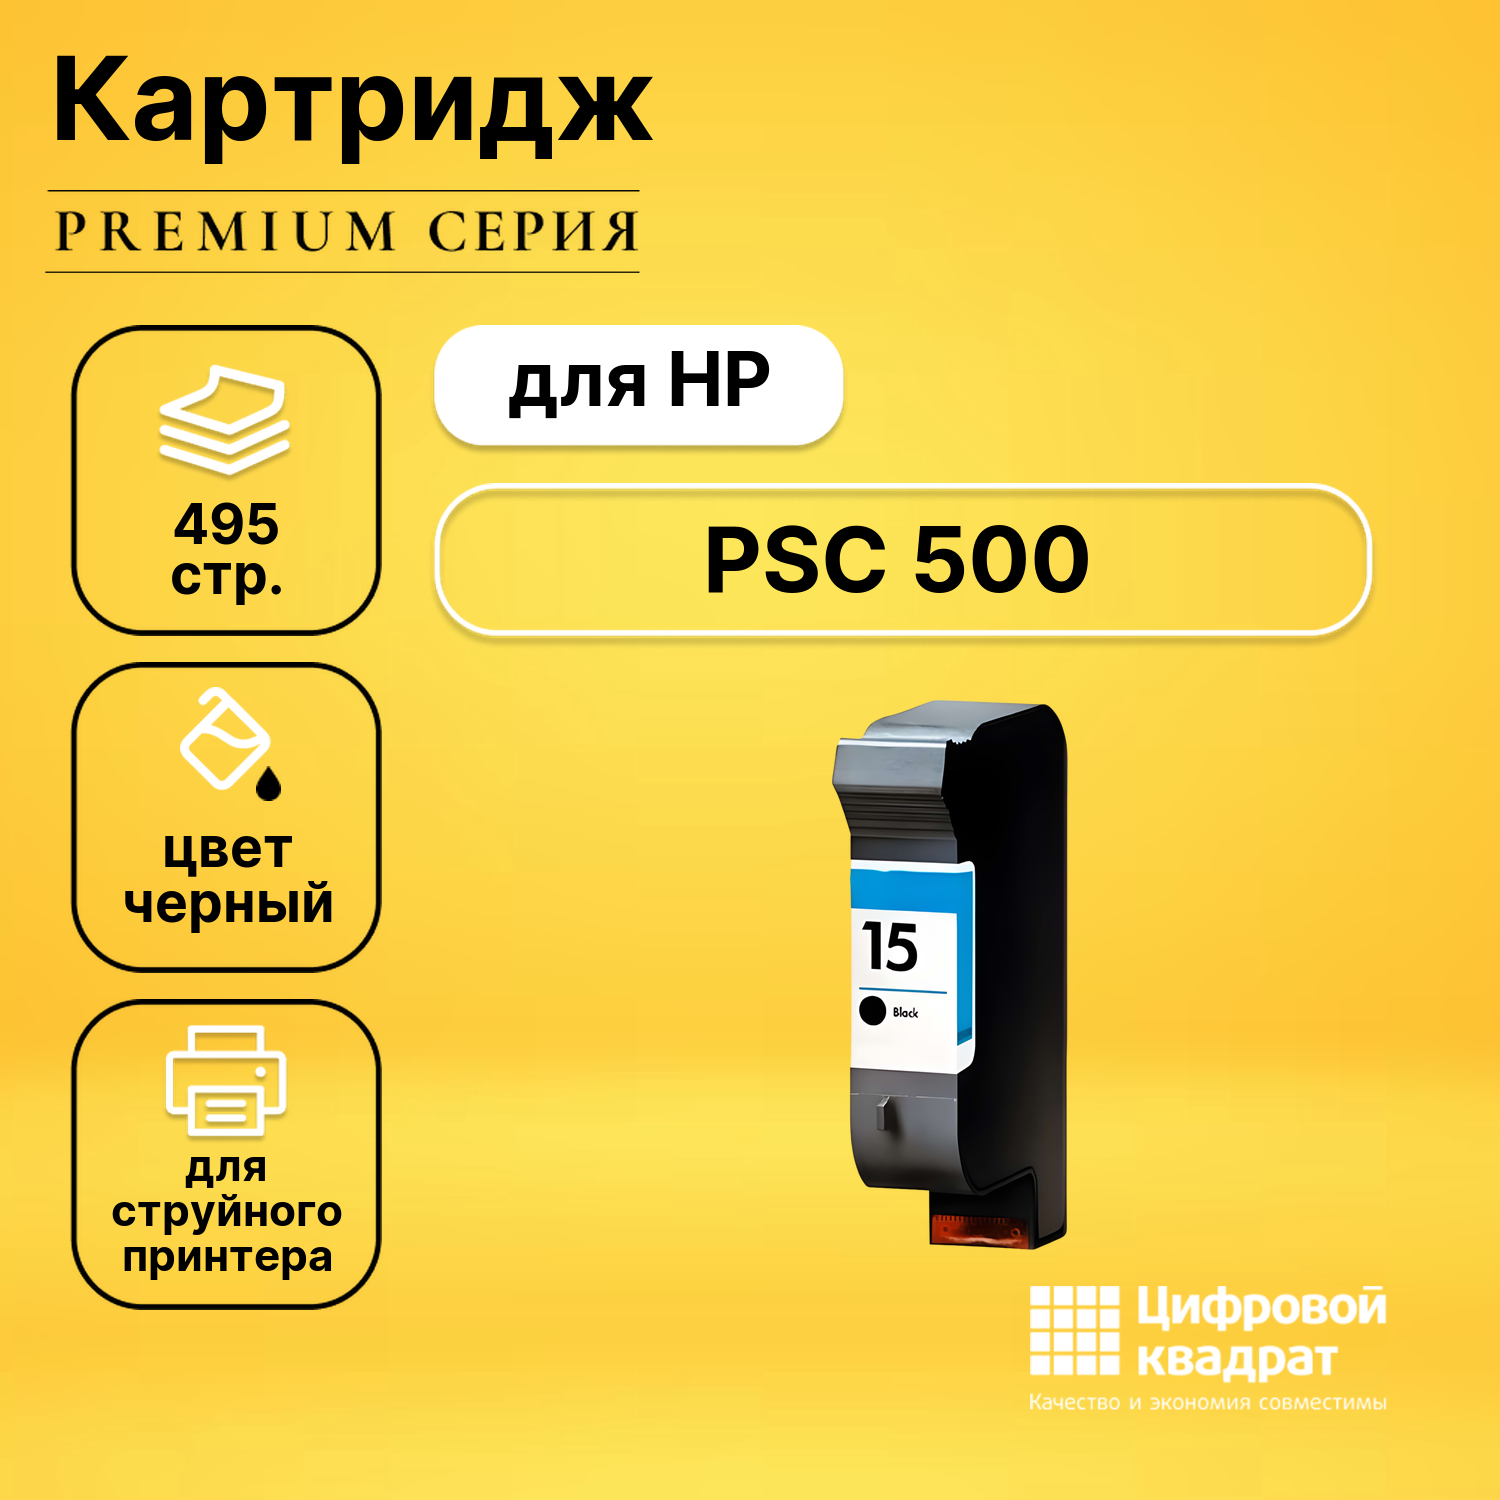 Картридж DS для HP PSC 500 совместимый